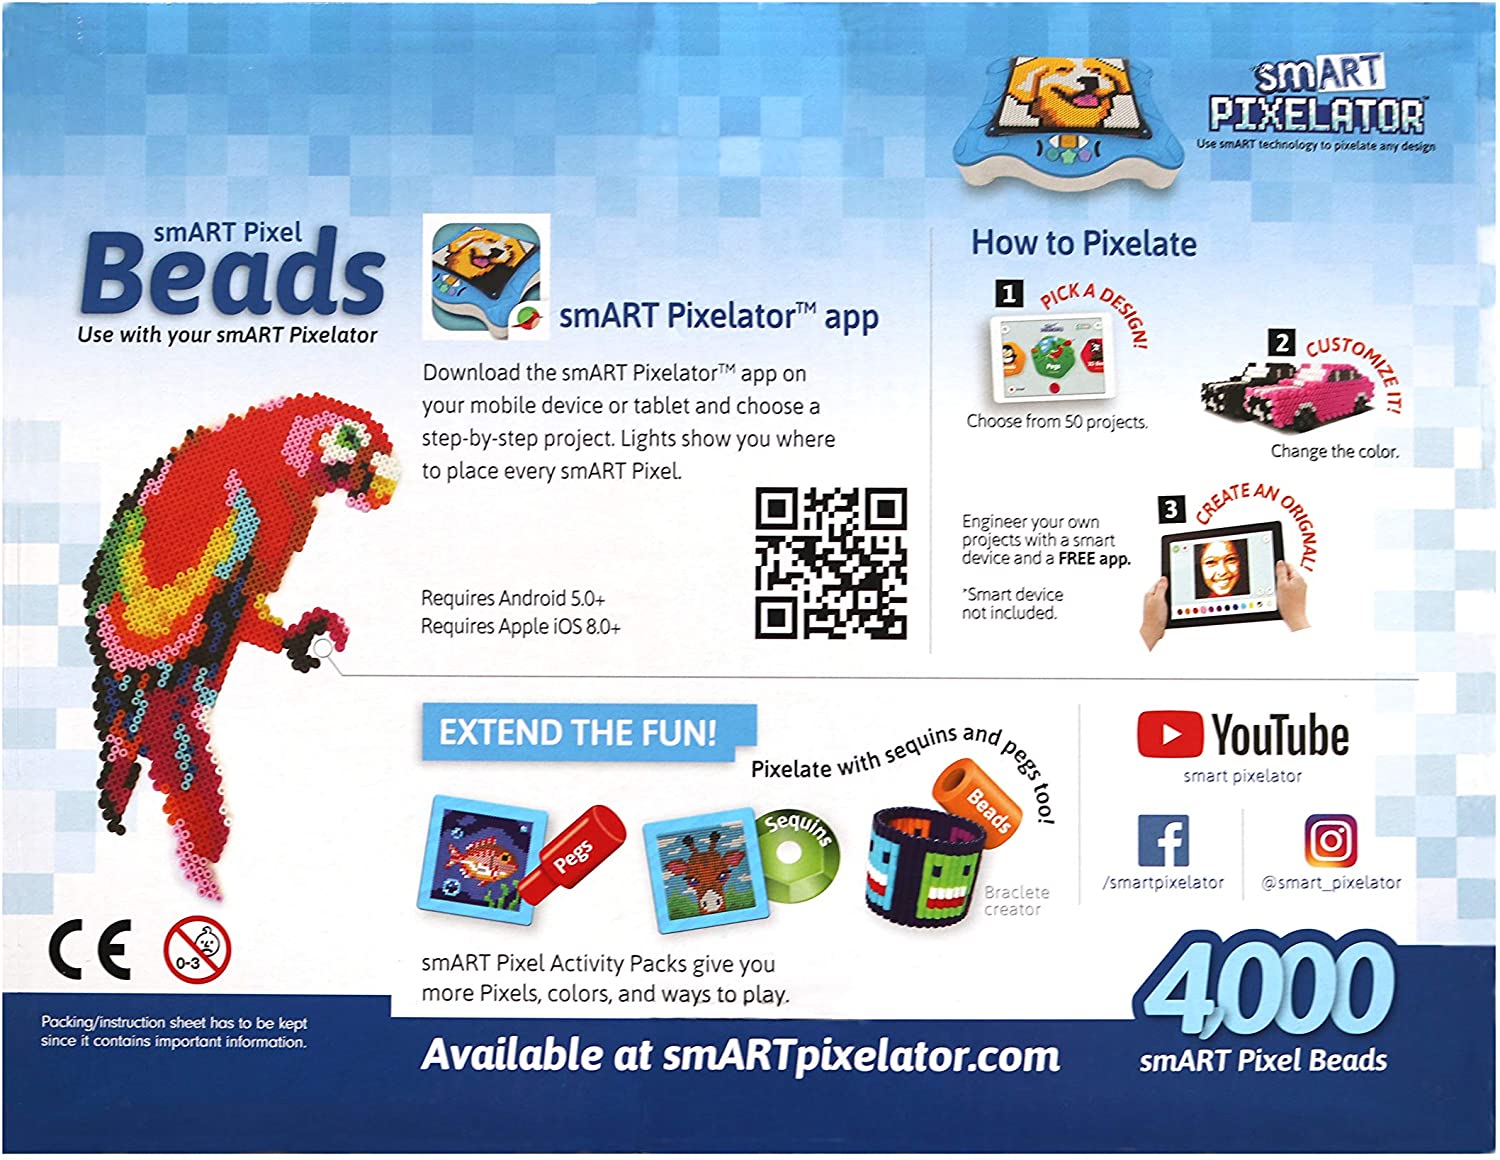 smART Pixelator™ - Organizer  Pixel beads, Container organization,  Organization